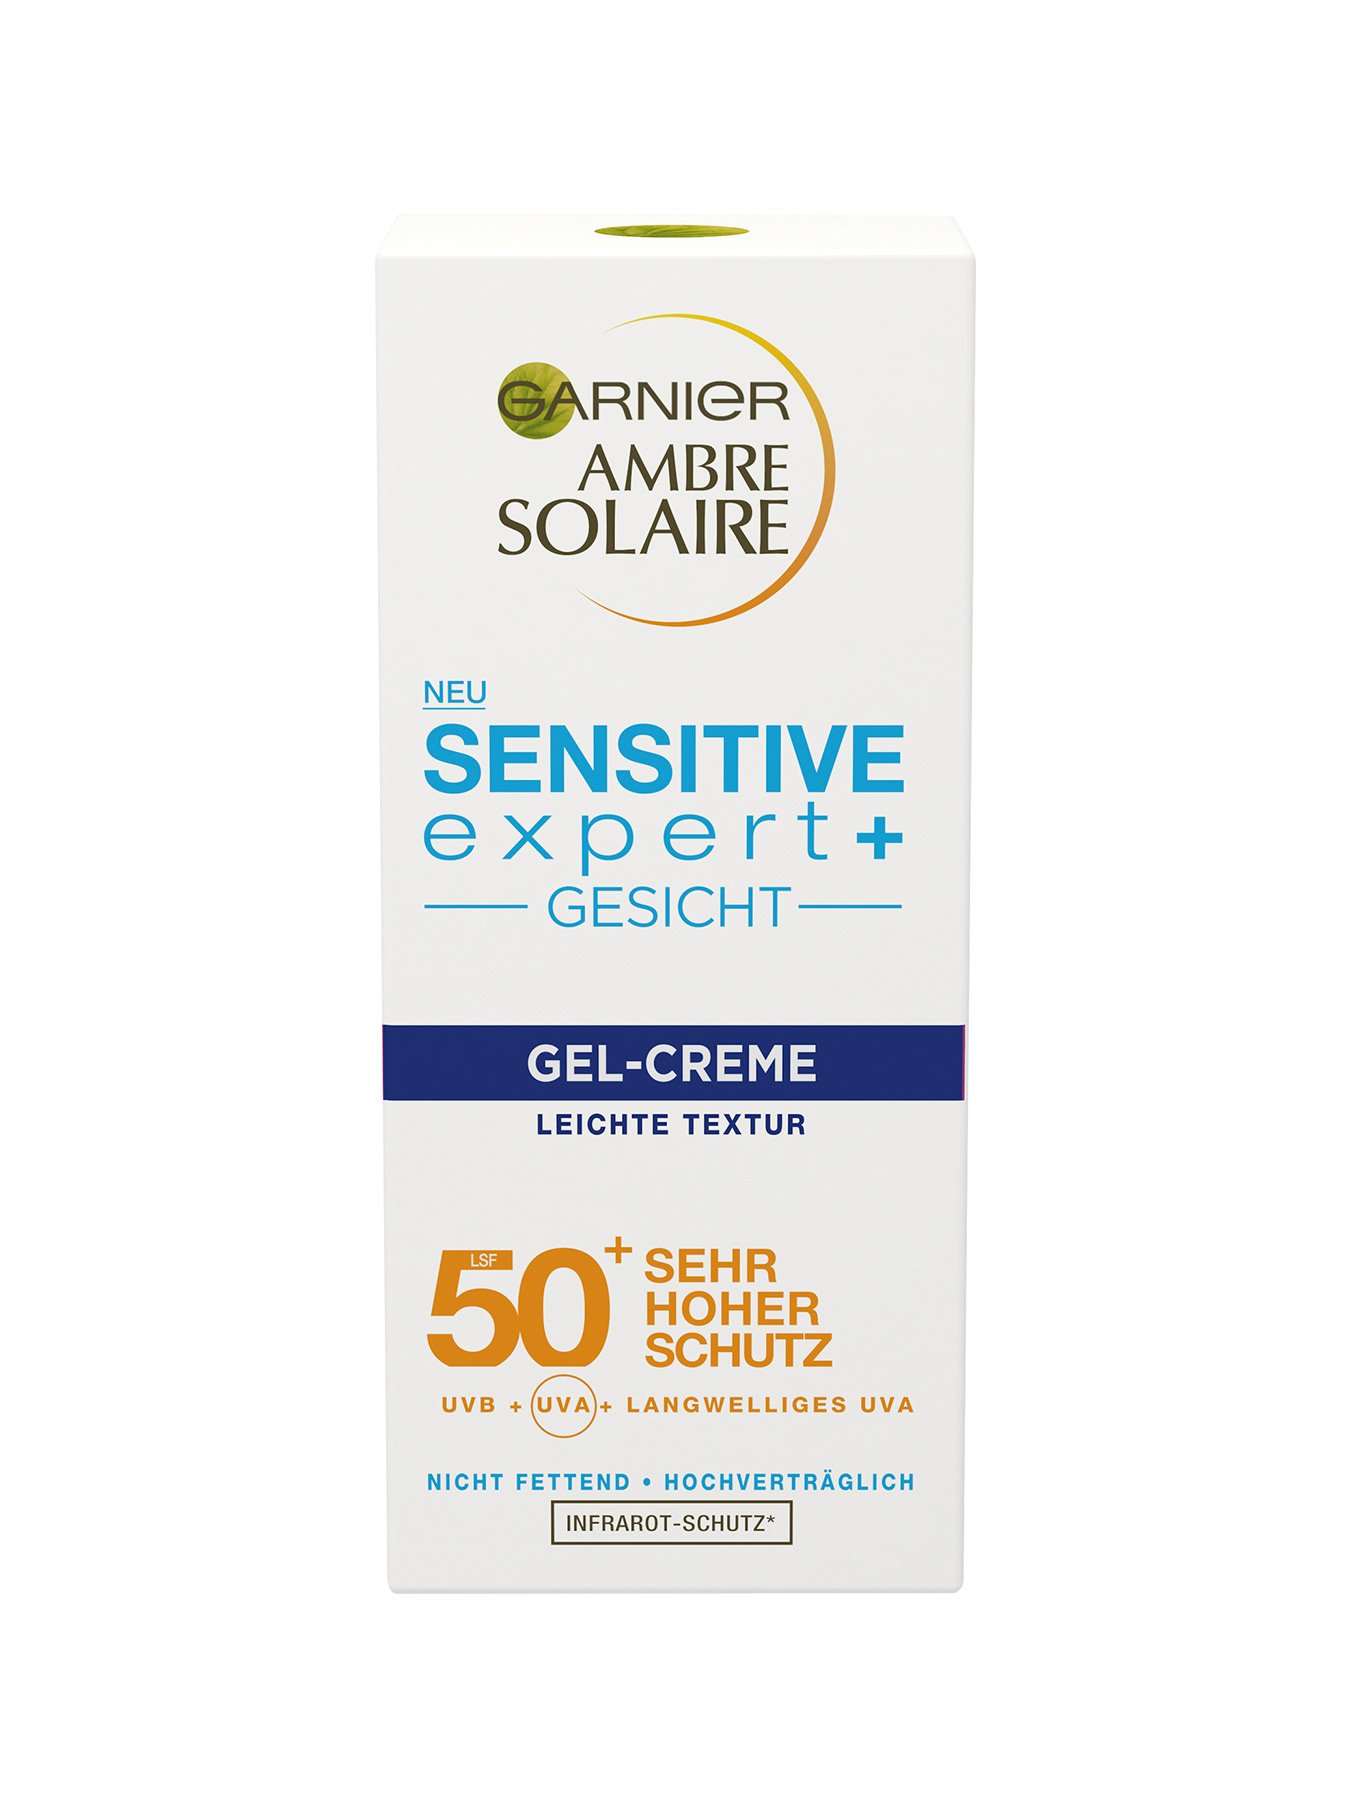 Ambre Solaire Sensitive expert+ LSF Gel-Creme Gesicht Garnier 50+ 